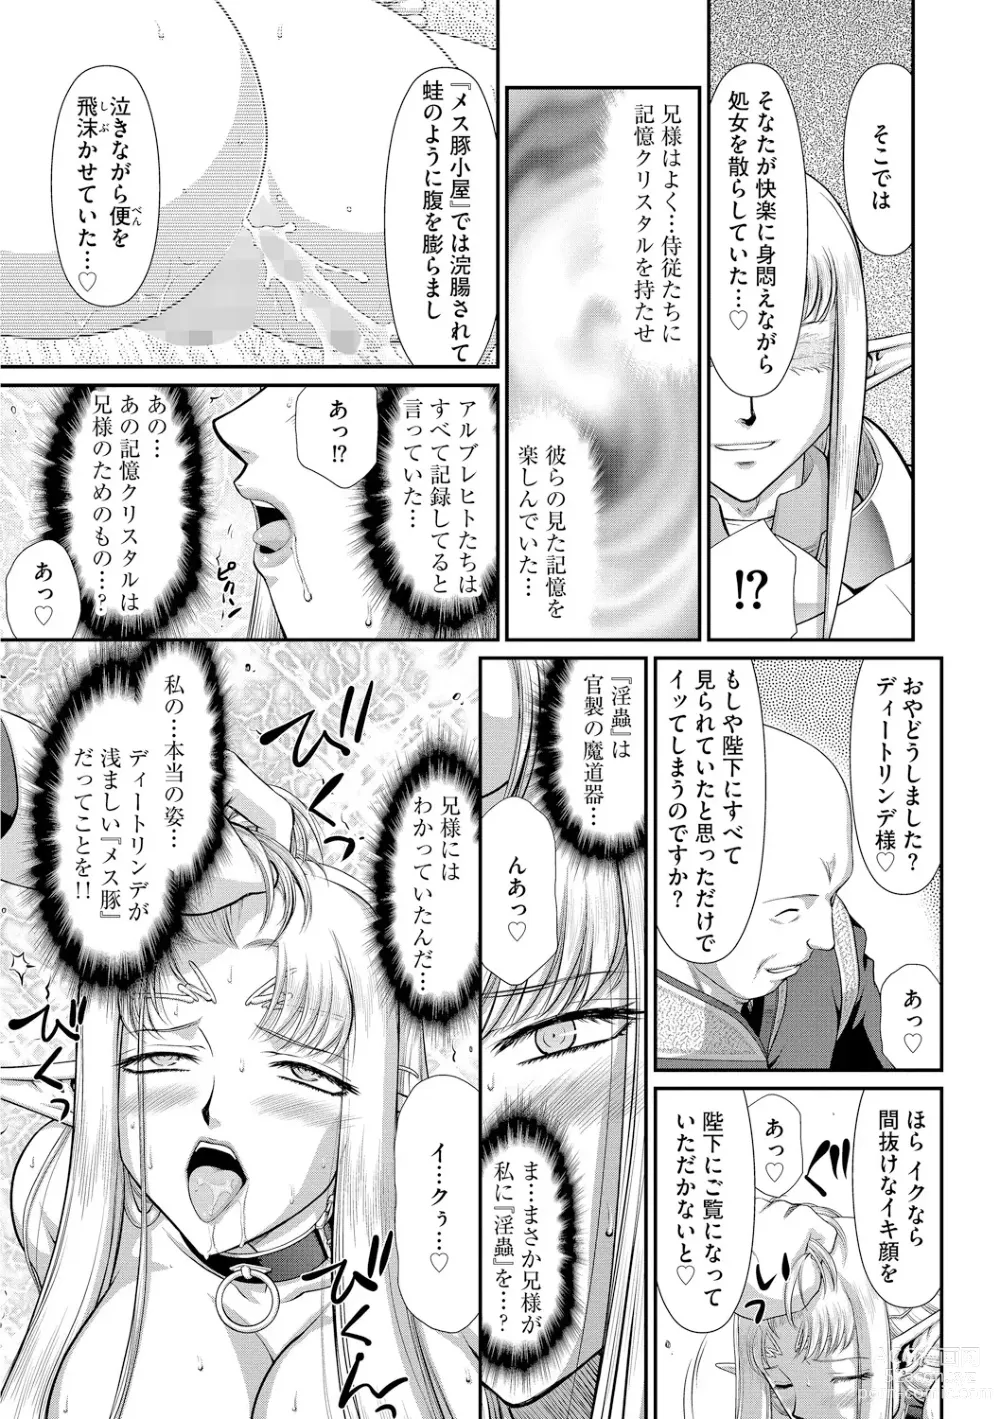 Page 179 of manga Ingoku no Kouki Dietlinde